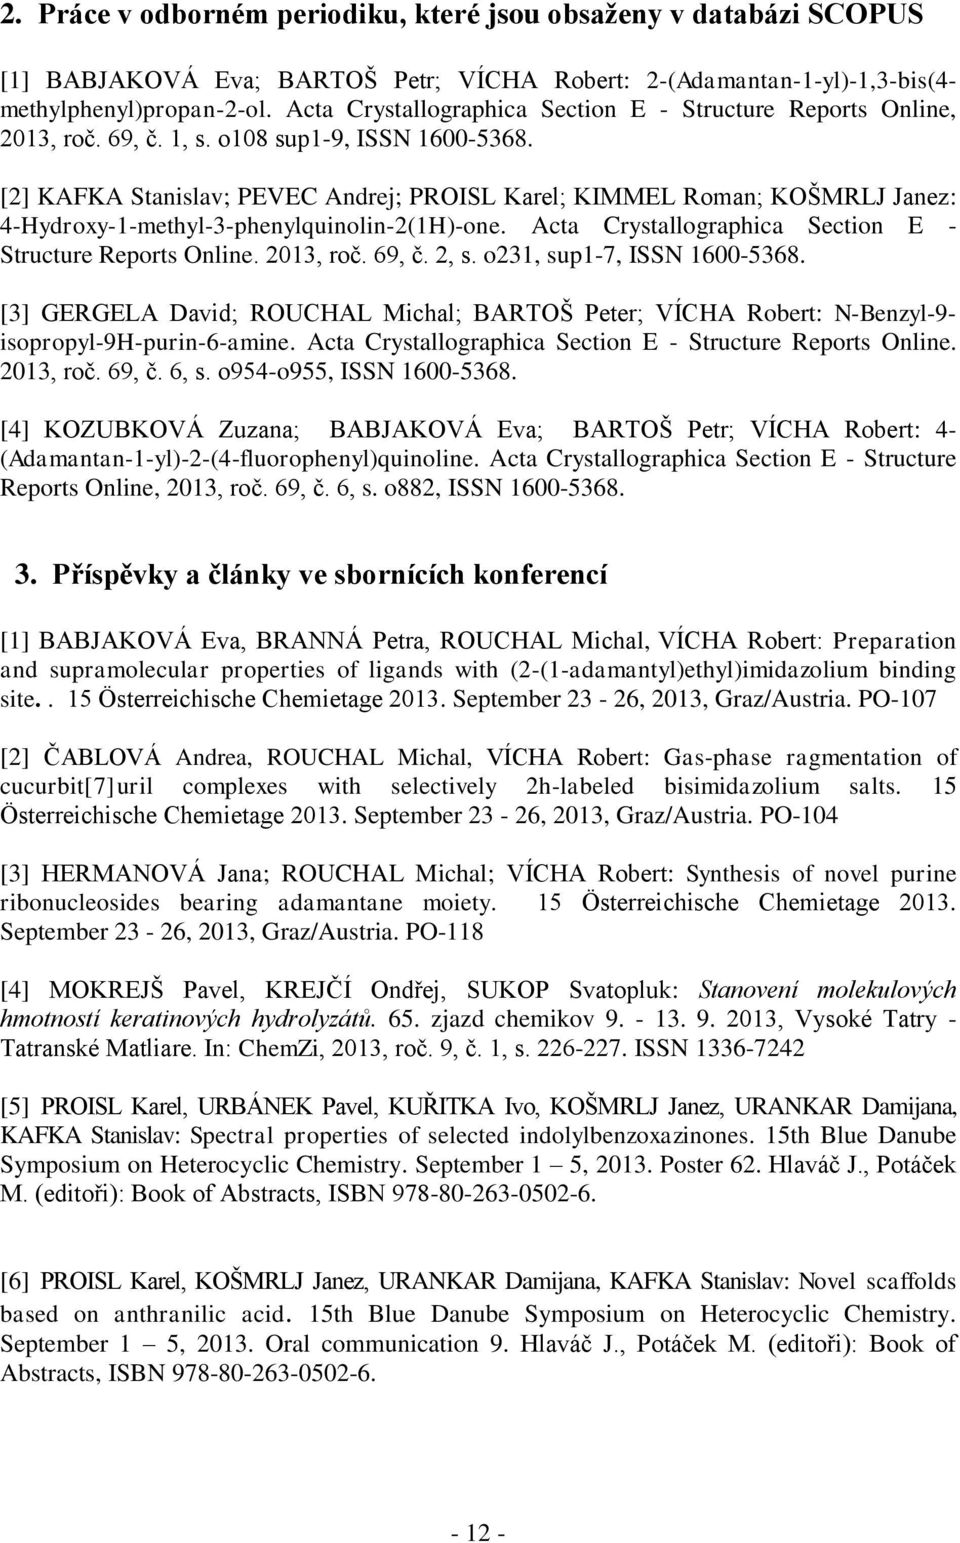 [2] KAFKA Stanislav; PEVEC Andrej; PROISL Karel; KIMMEL Roman; KOŠMRLJ Janez: 4-Hydroxy-1-methyl-3-phenylquinolin-2(1H)-one. Acta Crystallographica Section E - Structure Reports Online. 2013, roč.